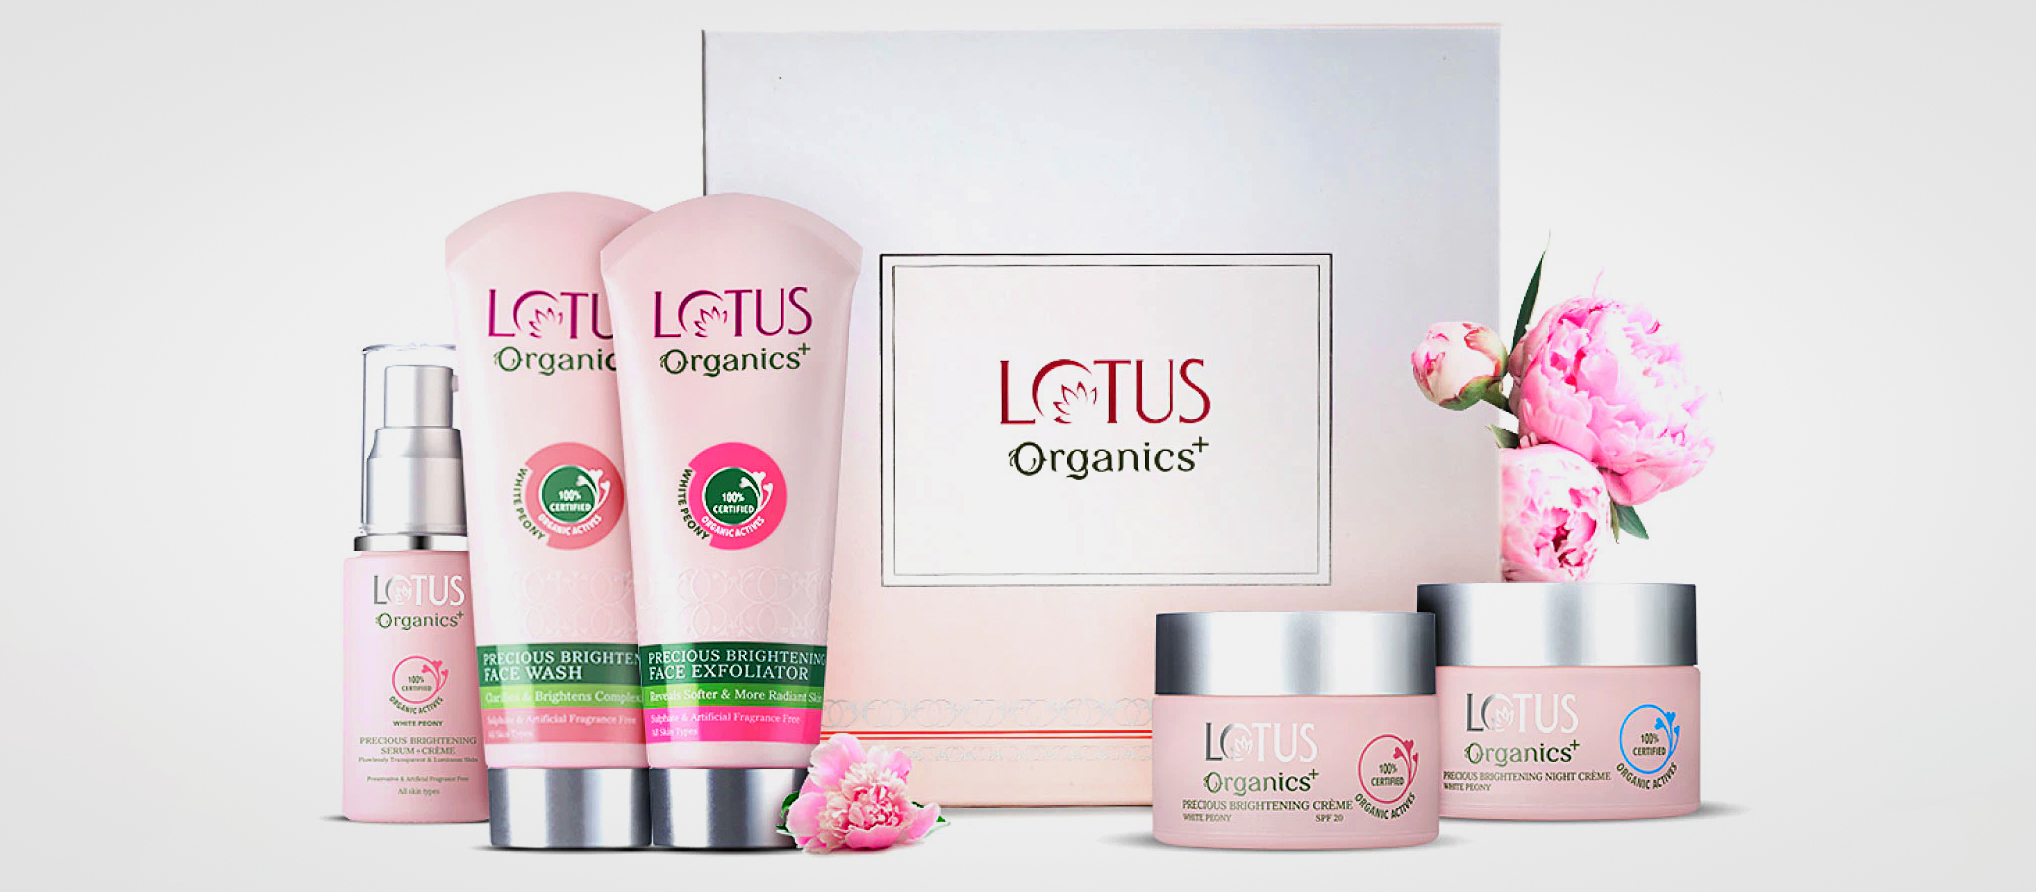 lotus organic product